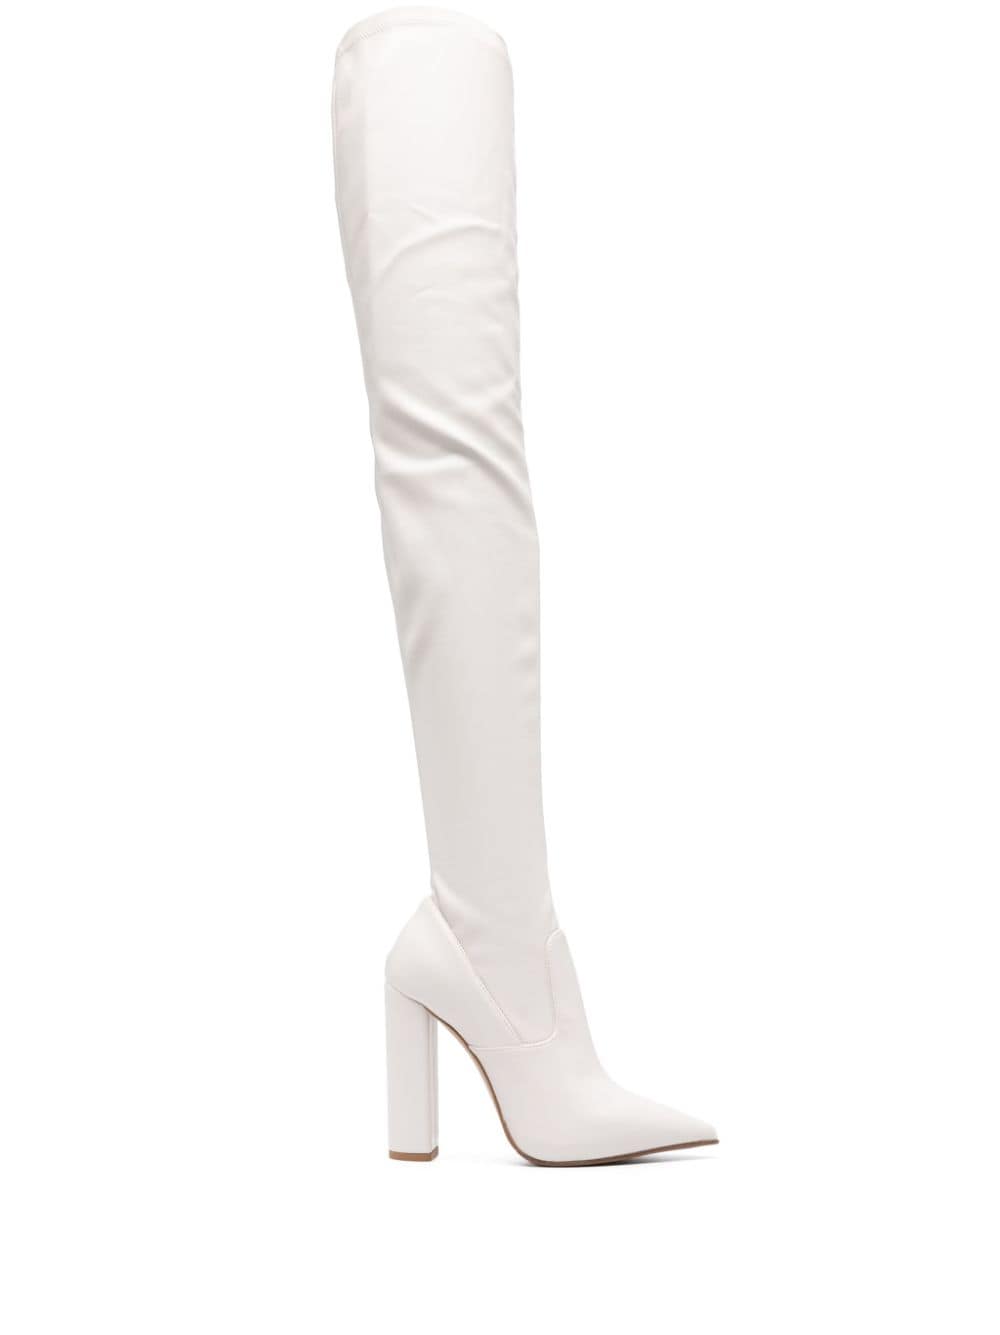 Le Silla Spitze Stiefel 110mm - Weiß von Le Silla